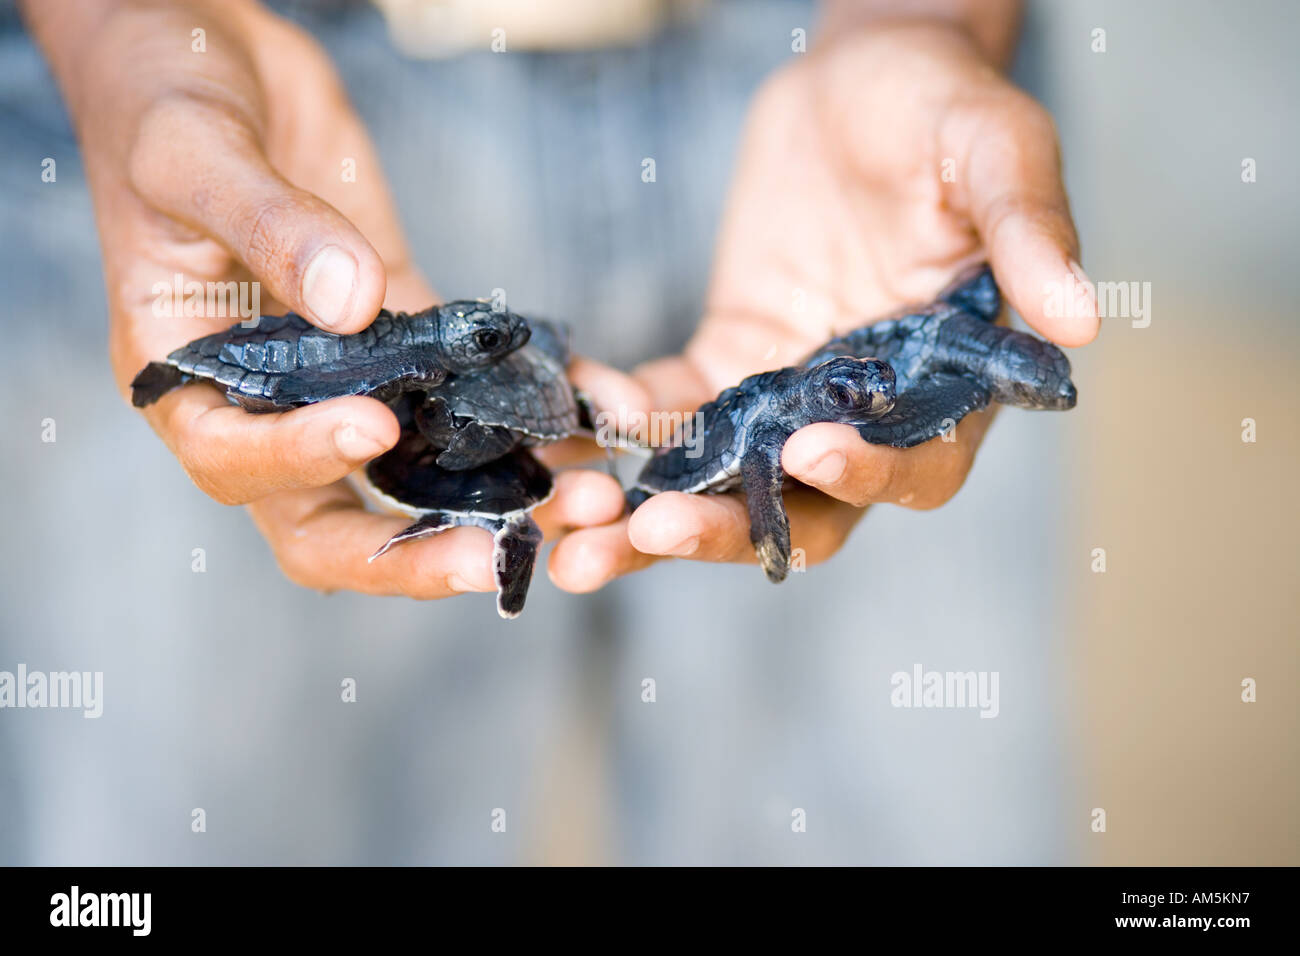 volunteer-holding-baby-sea-turtles-sea-t